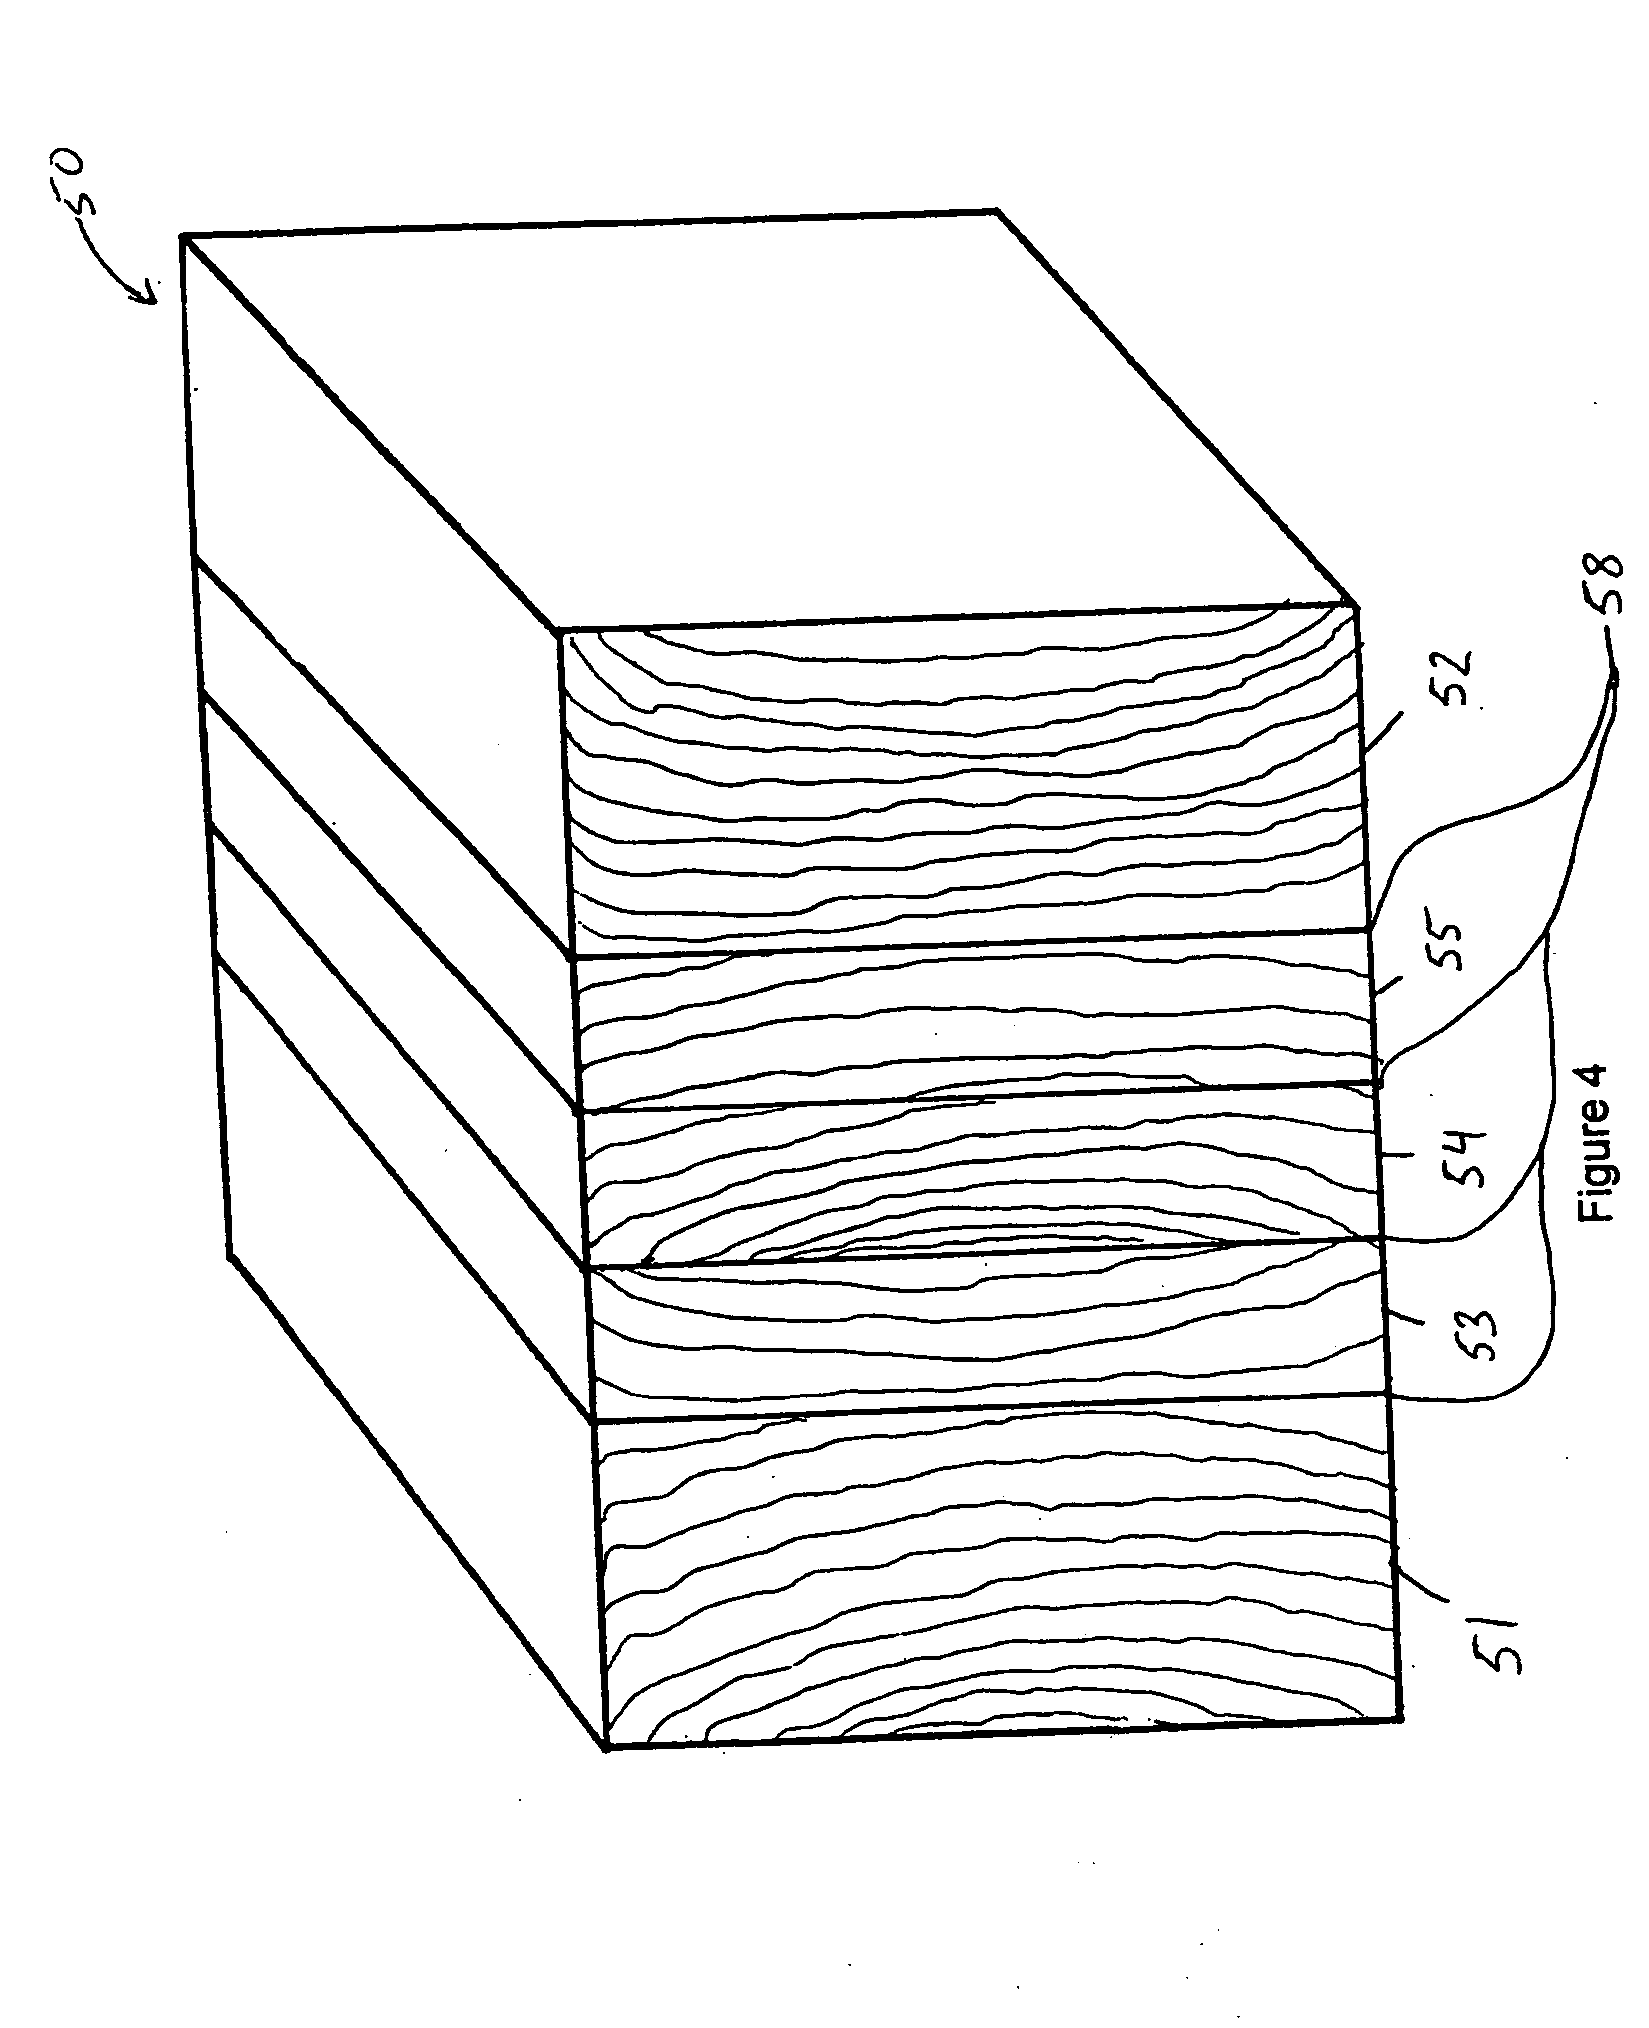 Pallet with laminate blocks